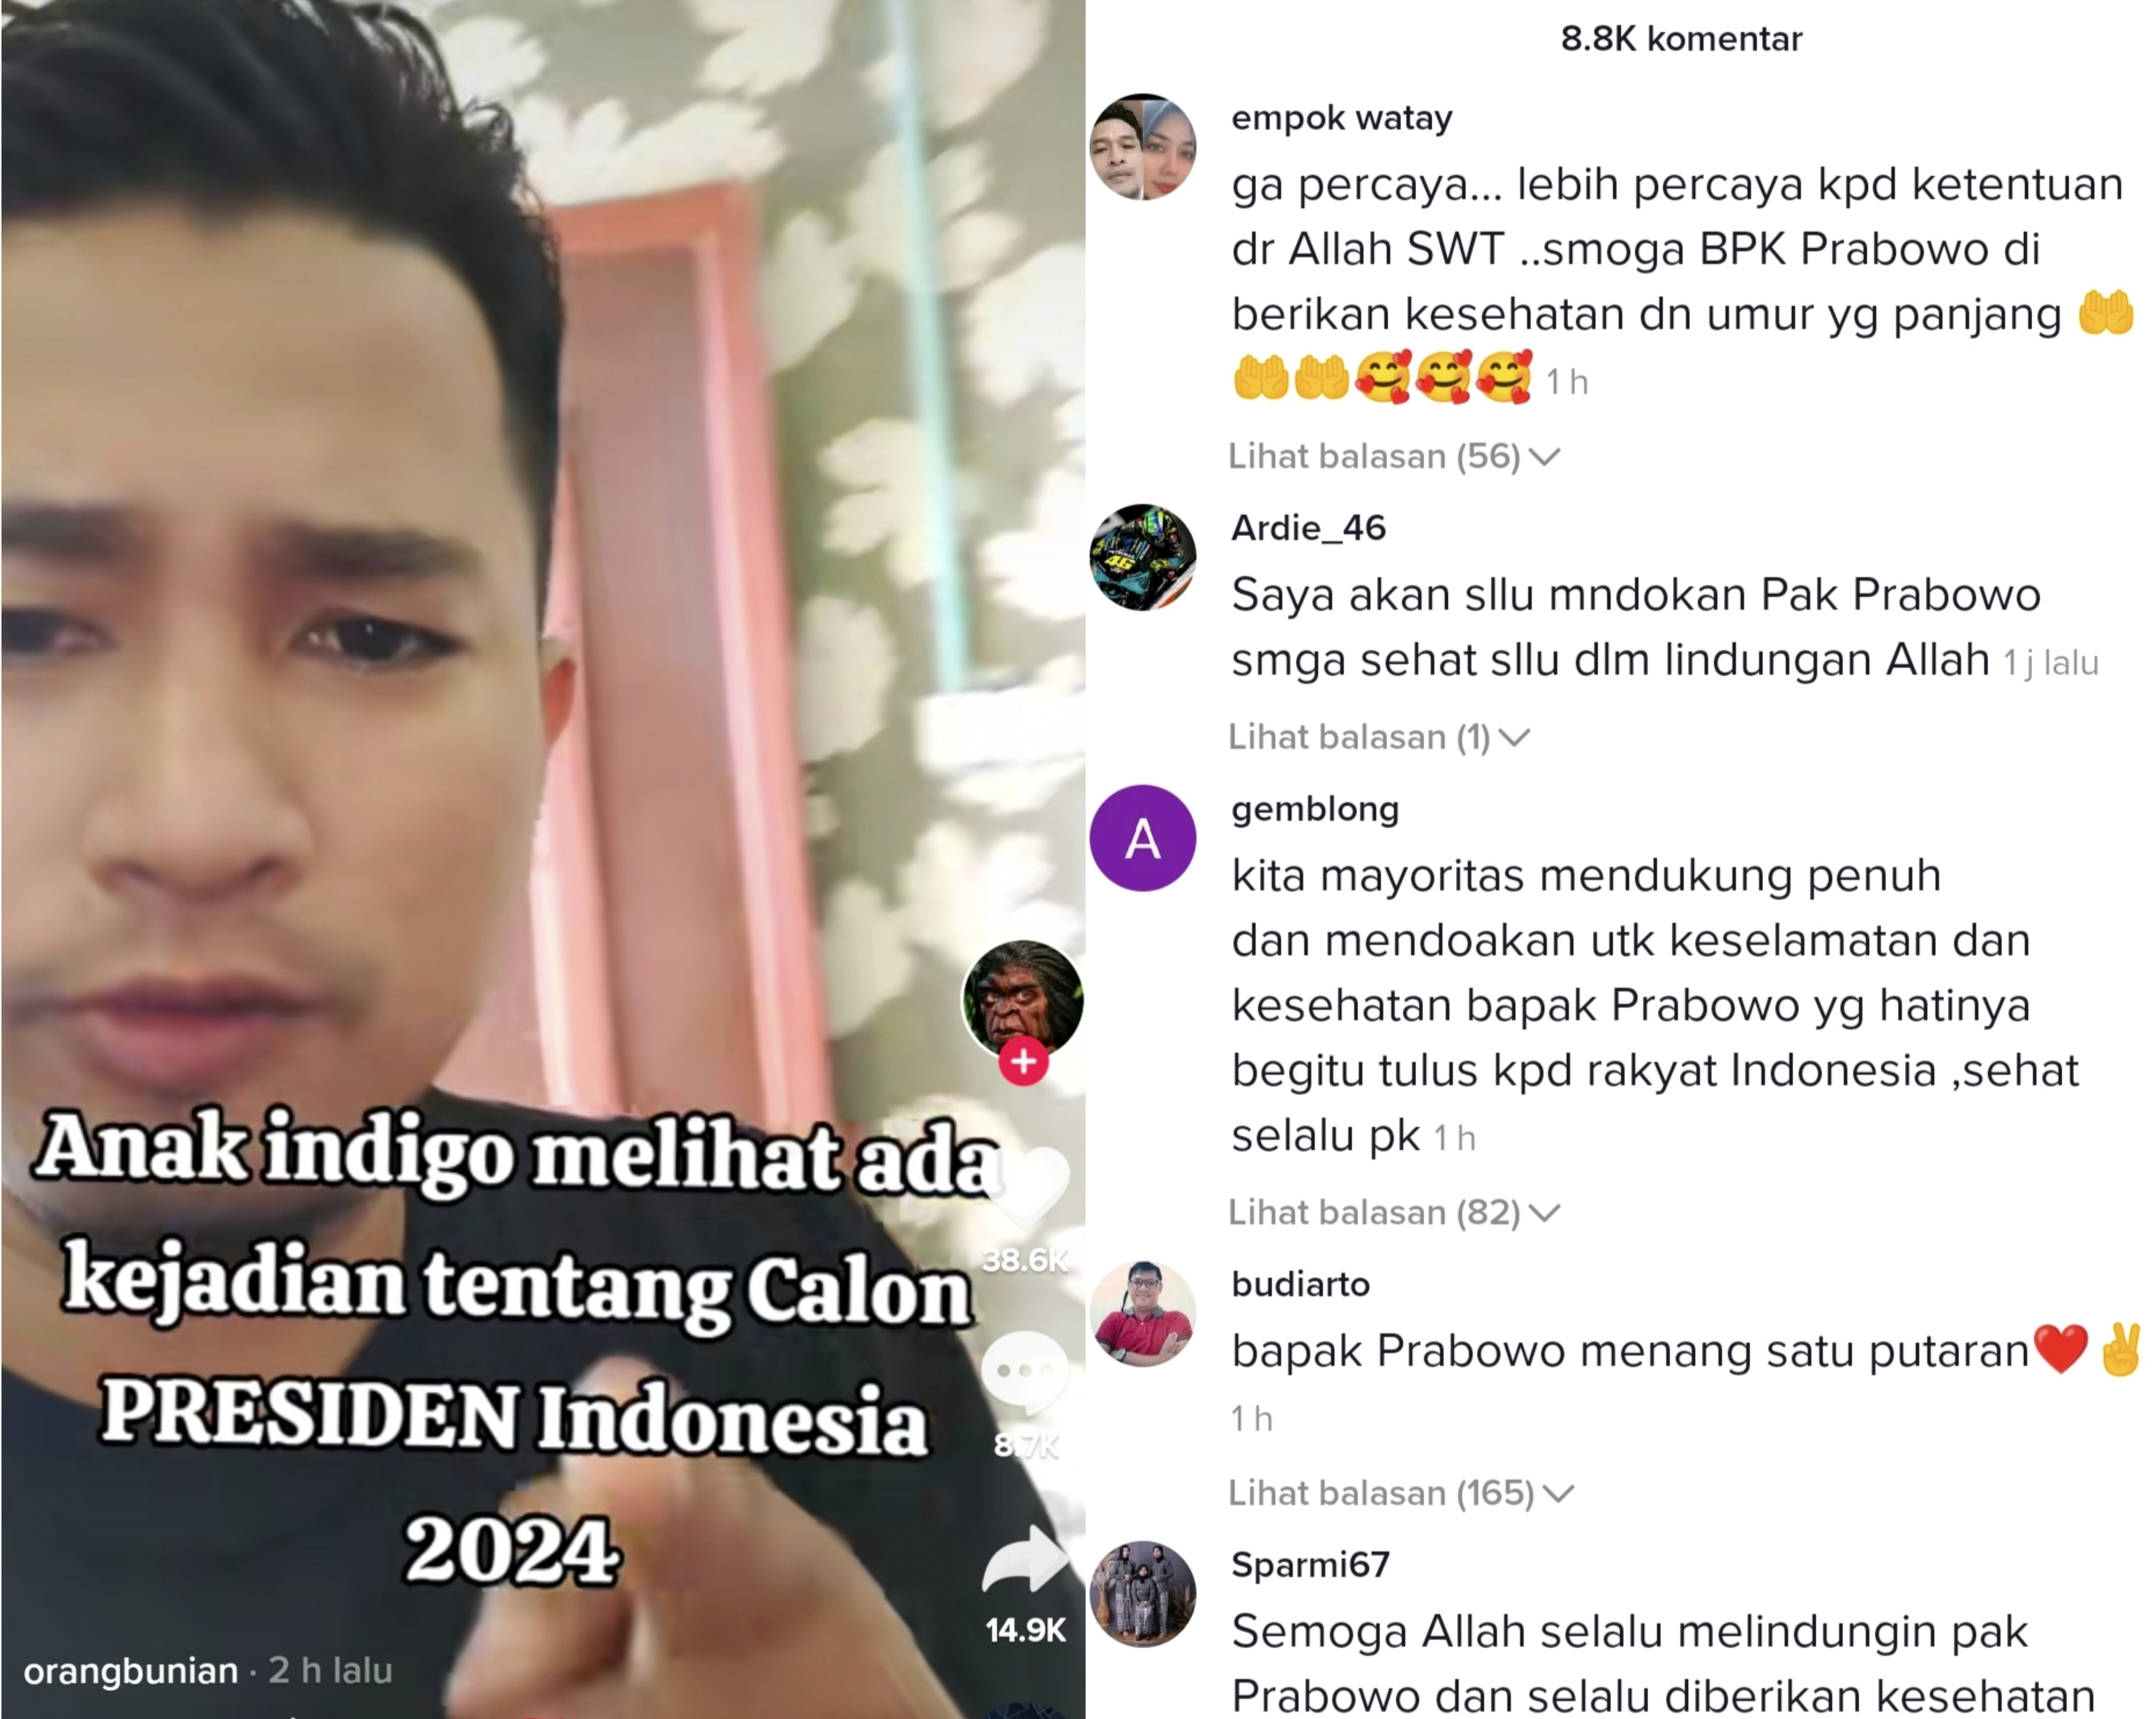 Mengaku Indigo, Tiktokers Asal Aceh Ini Ramalkan Salah Satu Capres 2024 Kena Stroke